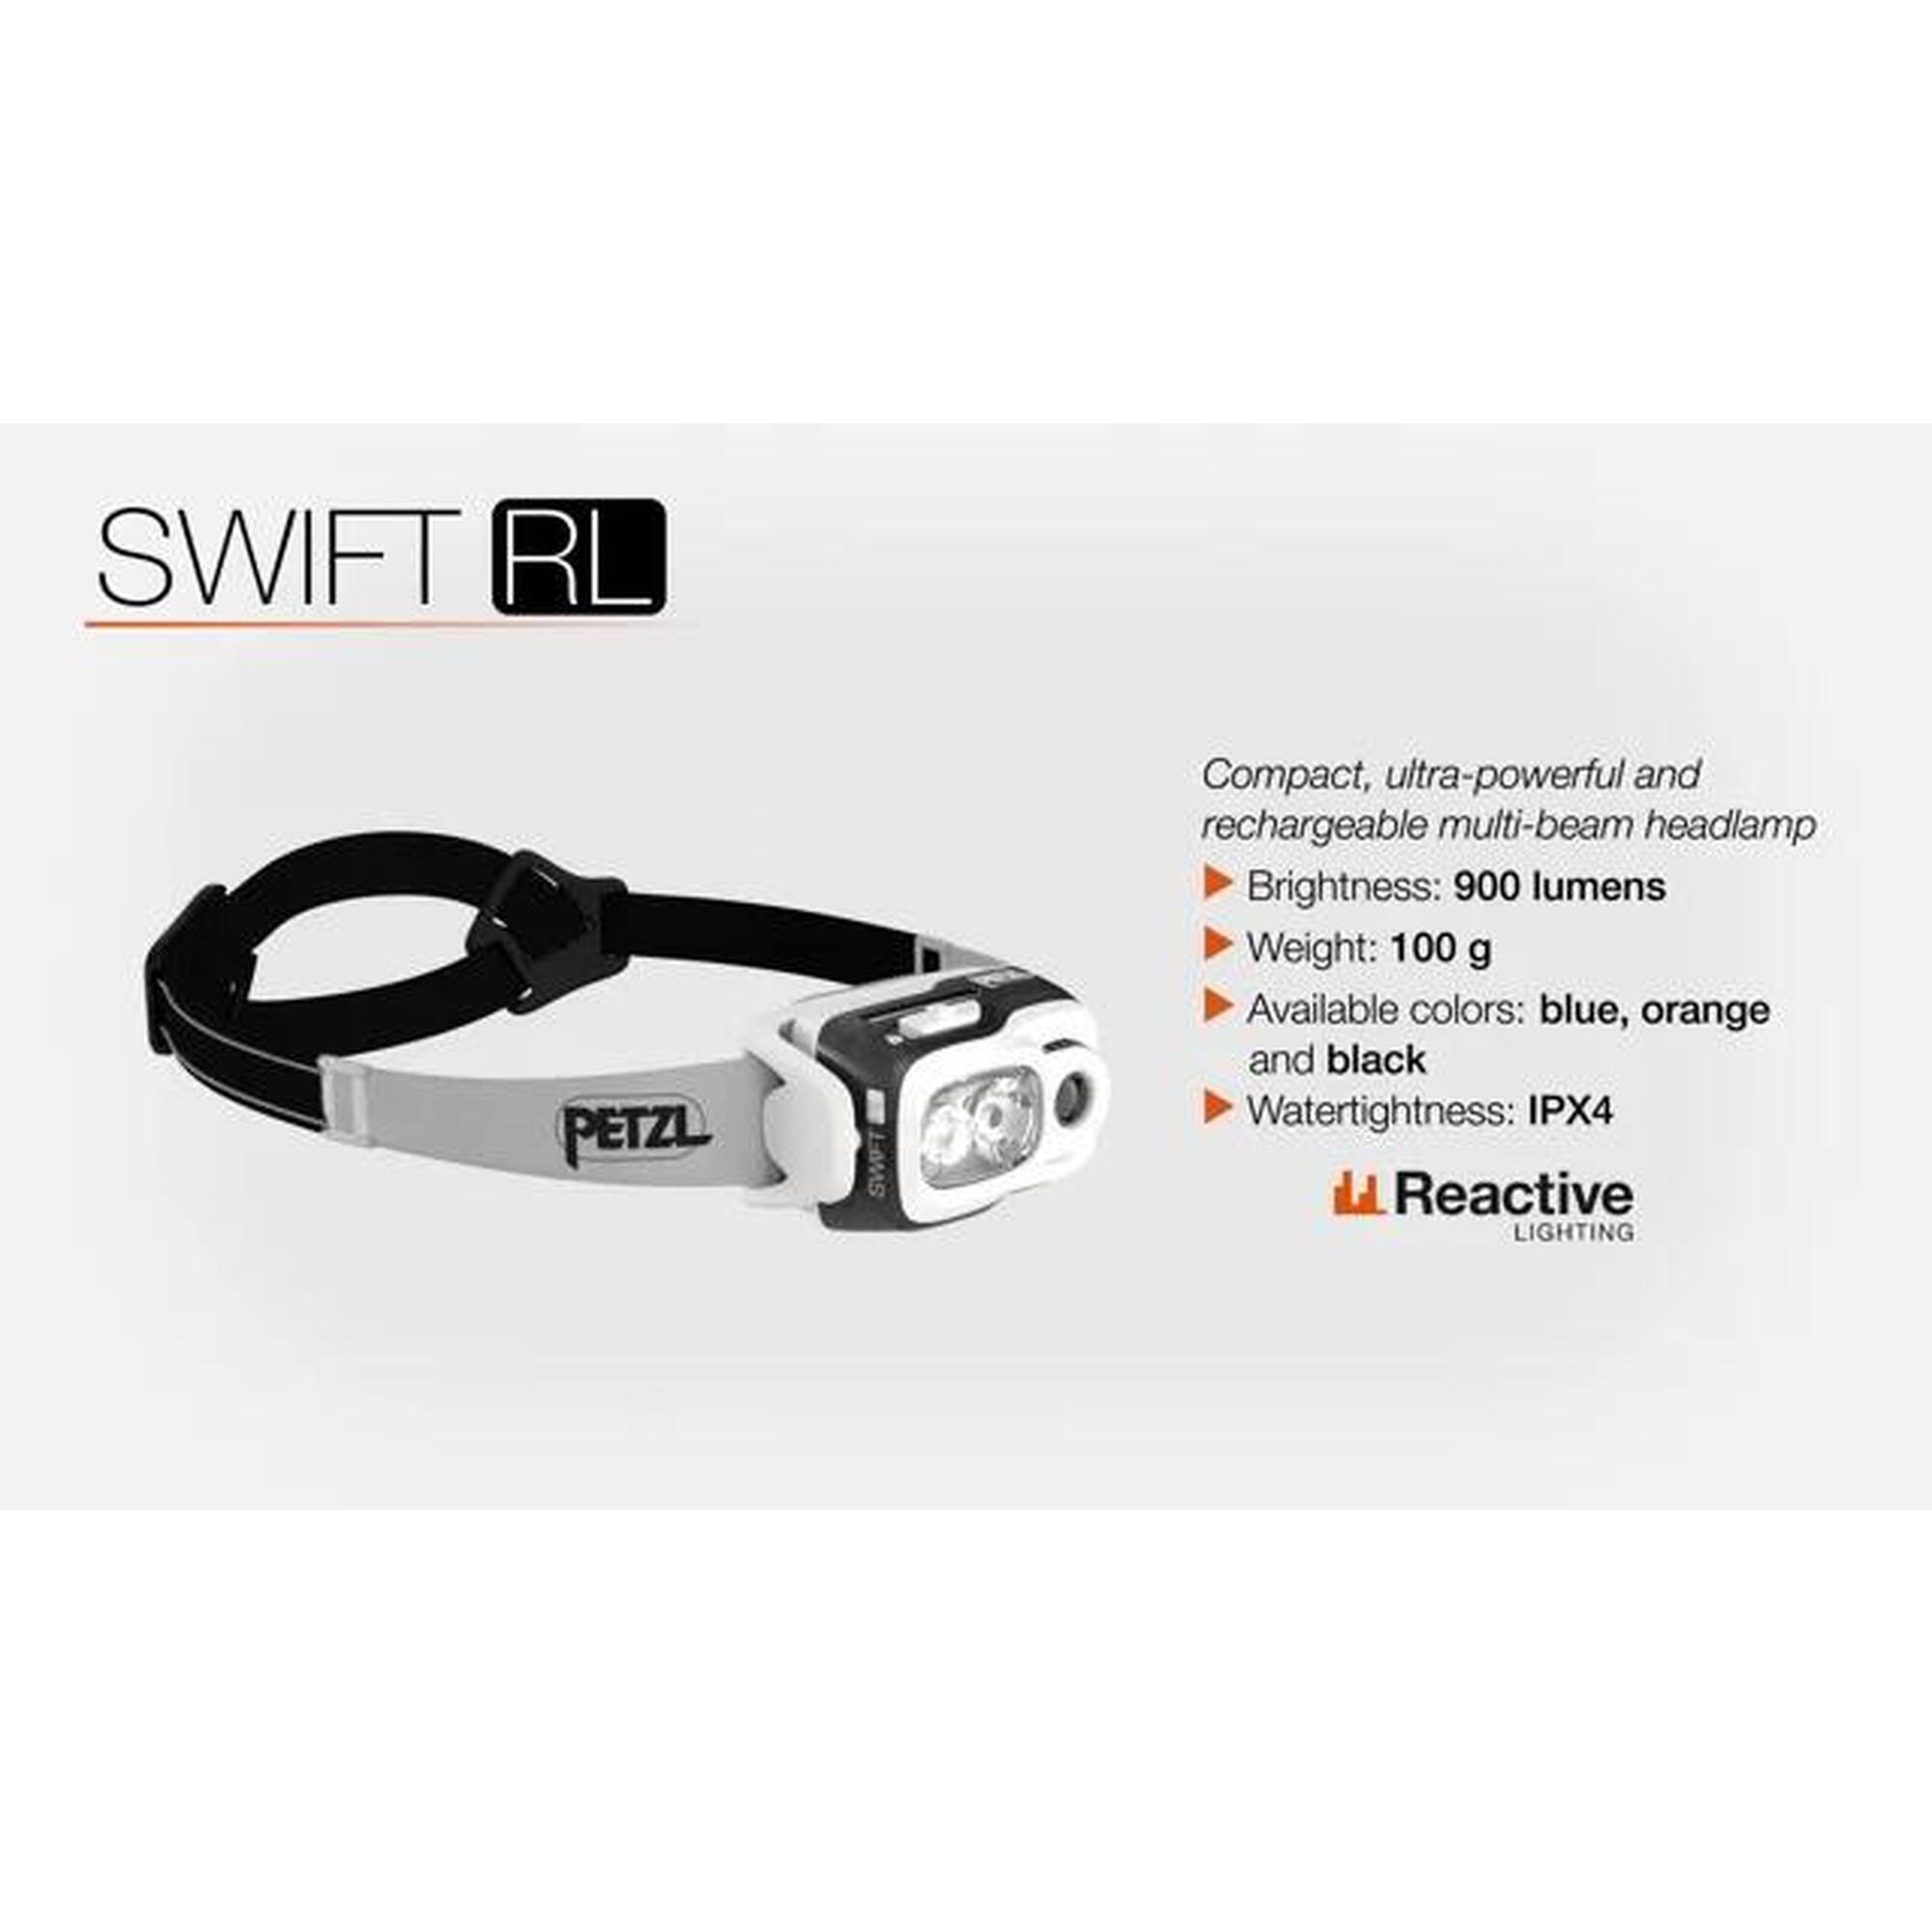 Swift RL 1100 Lumens Headlamp - Black